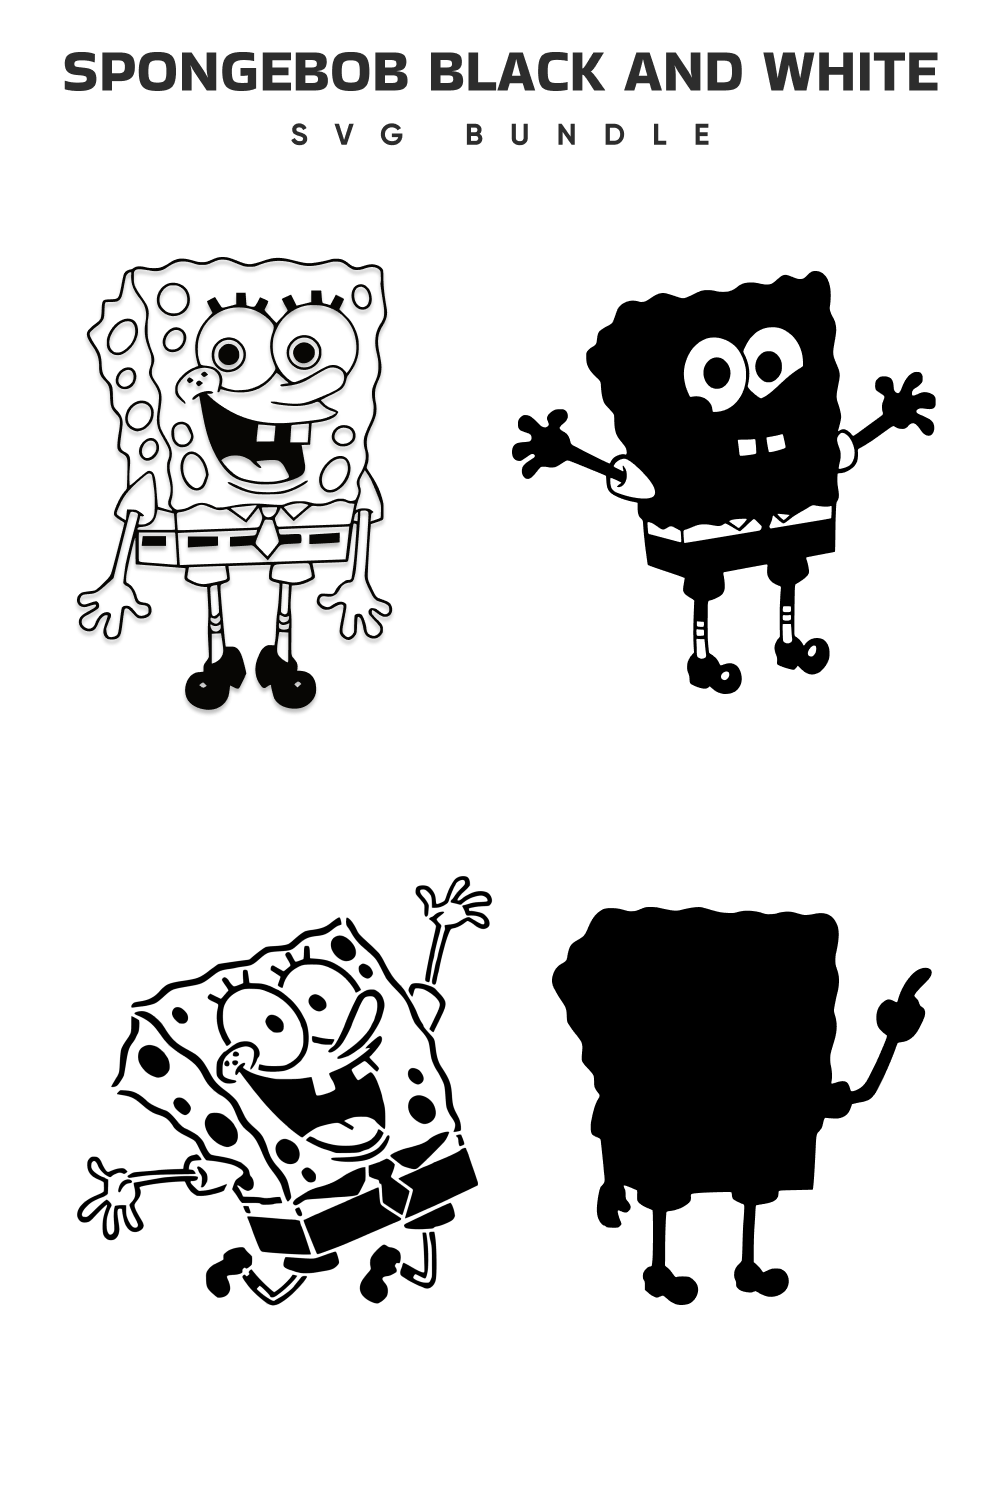 Happy sponge bob in a black and white style.